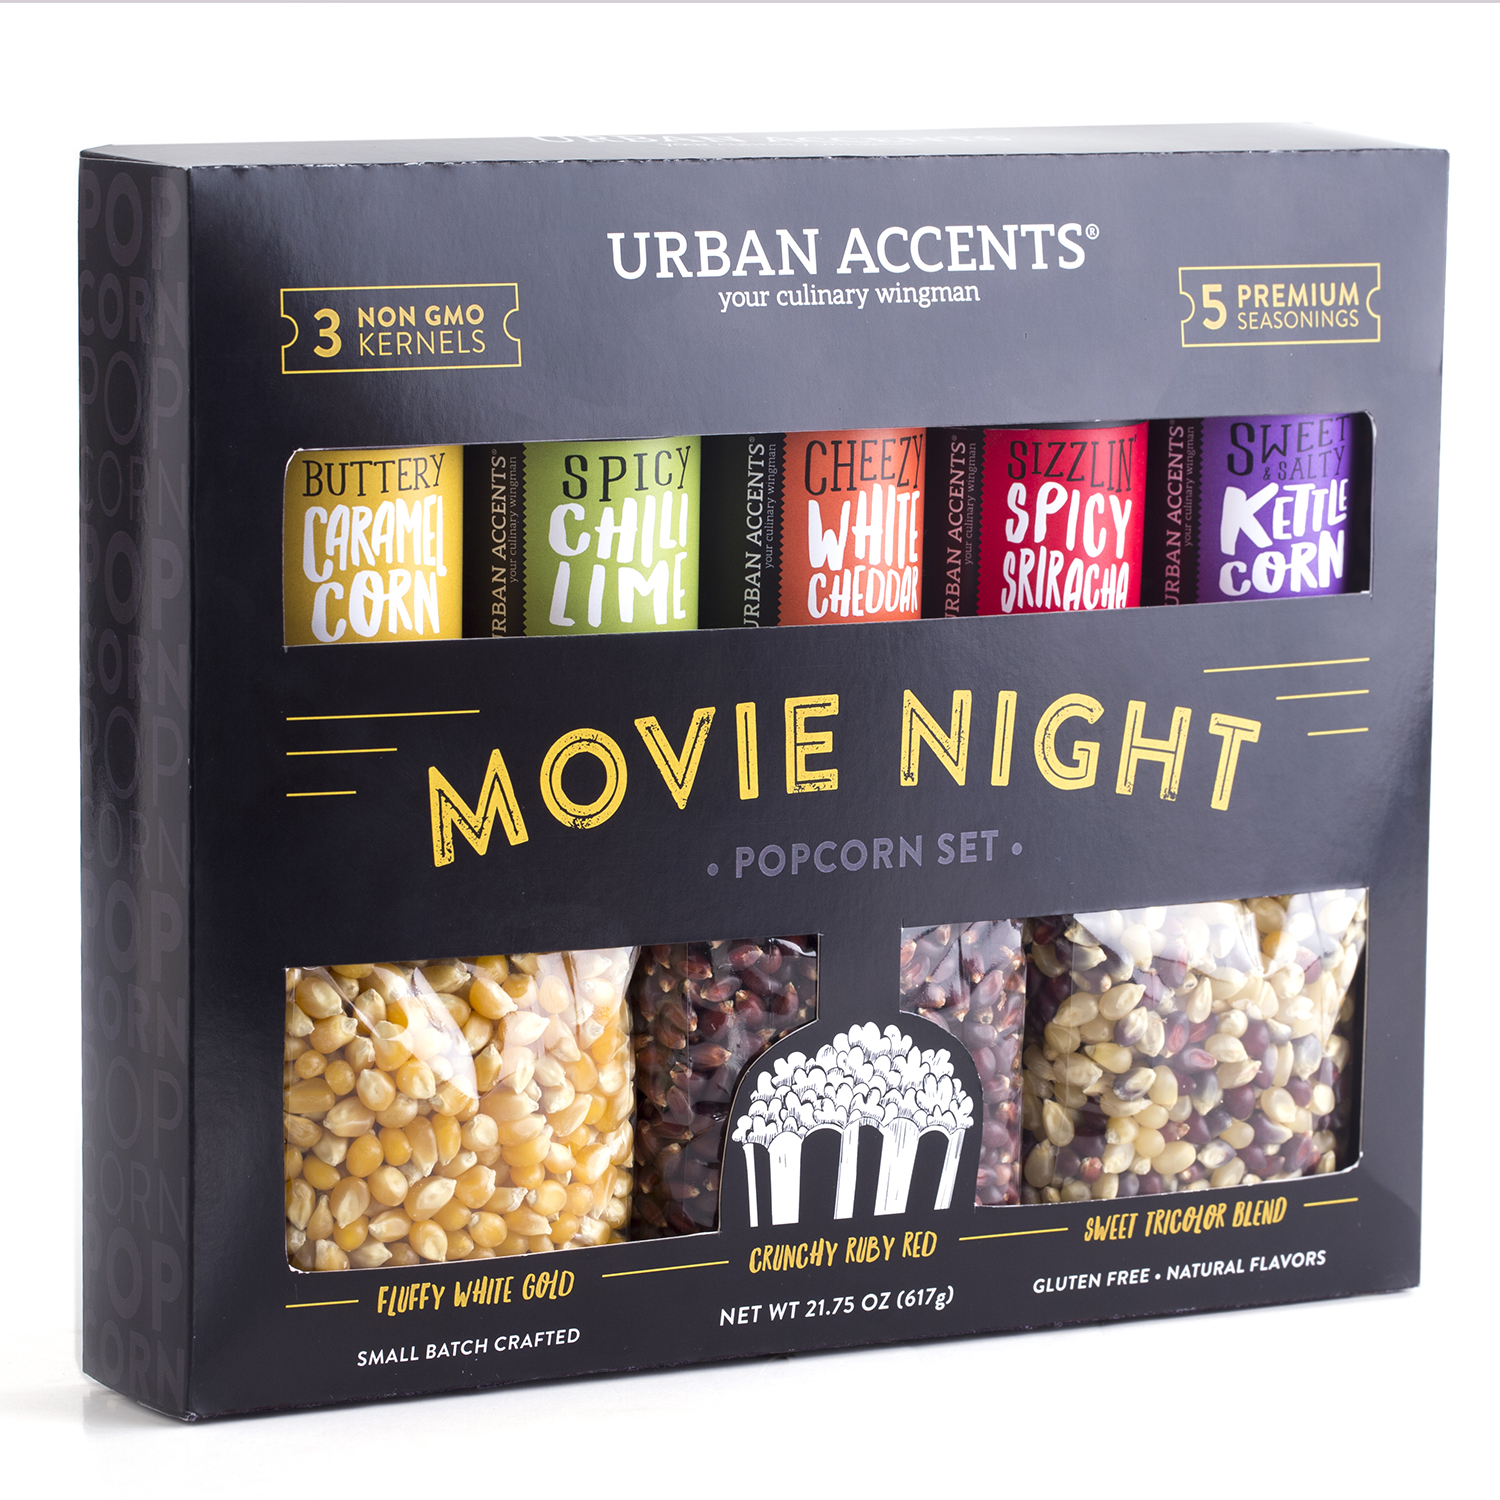 Urban Accents Movie Night Popcorn Gift Set - image 1 of 2